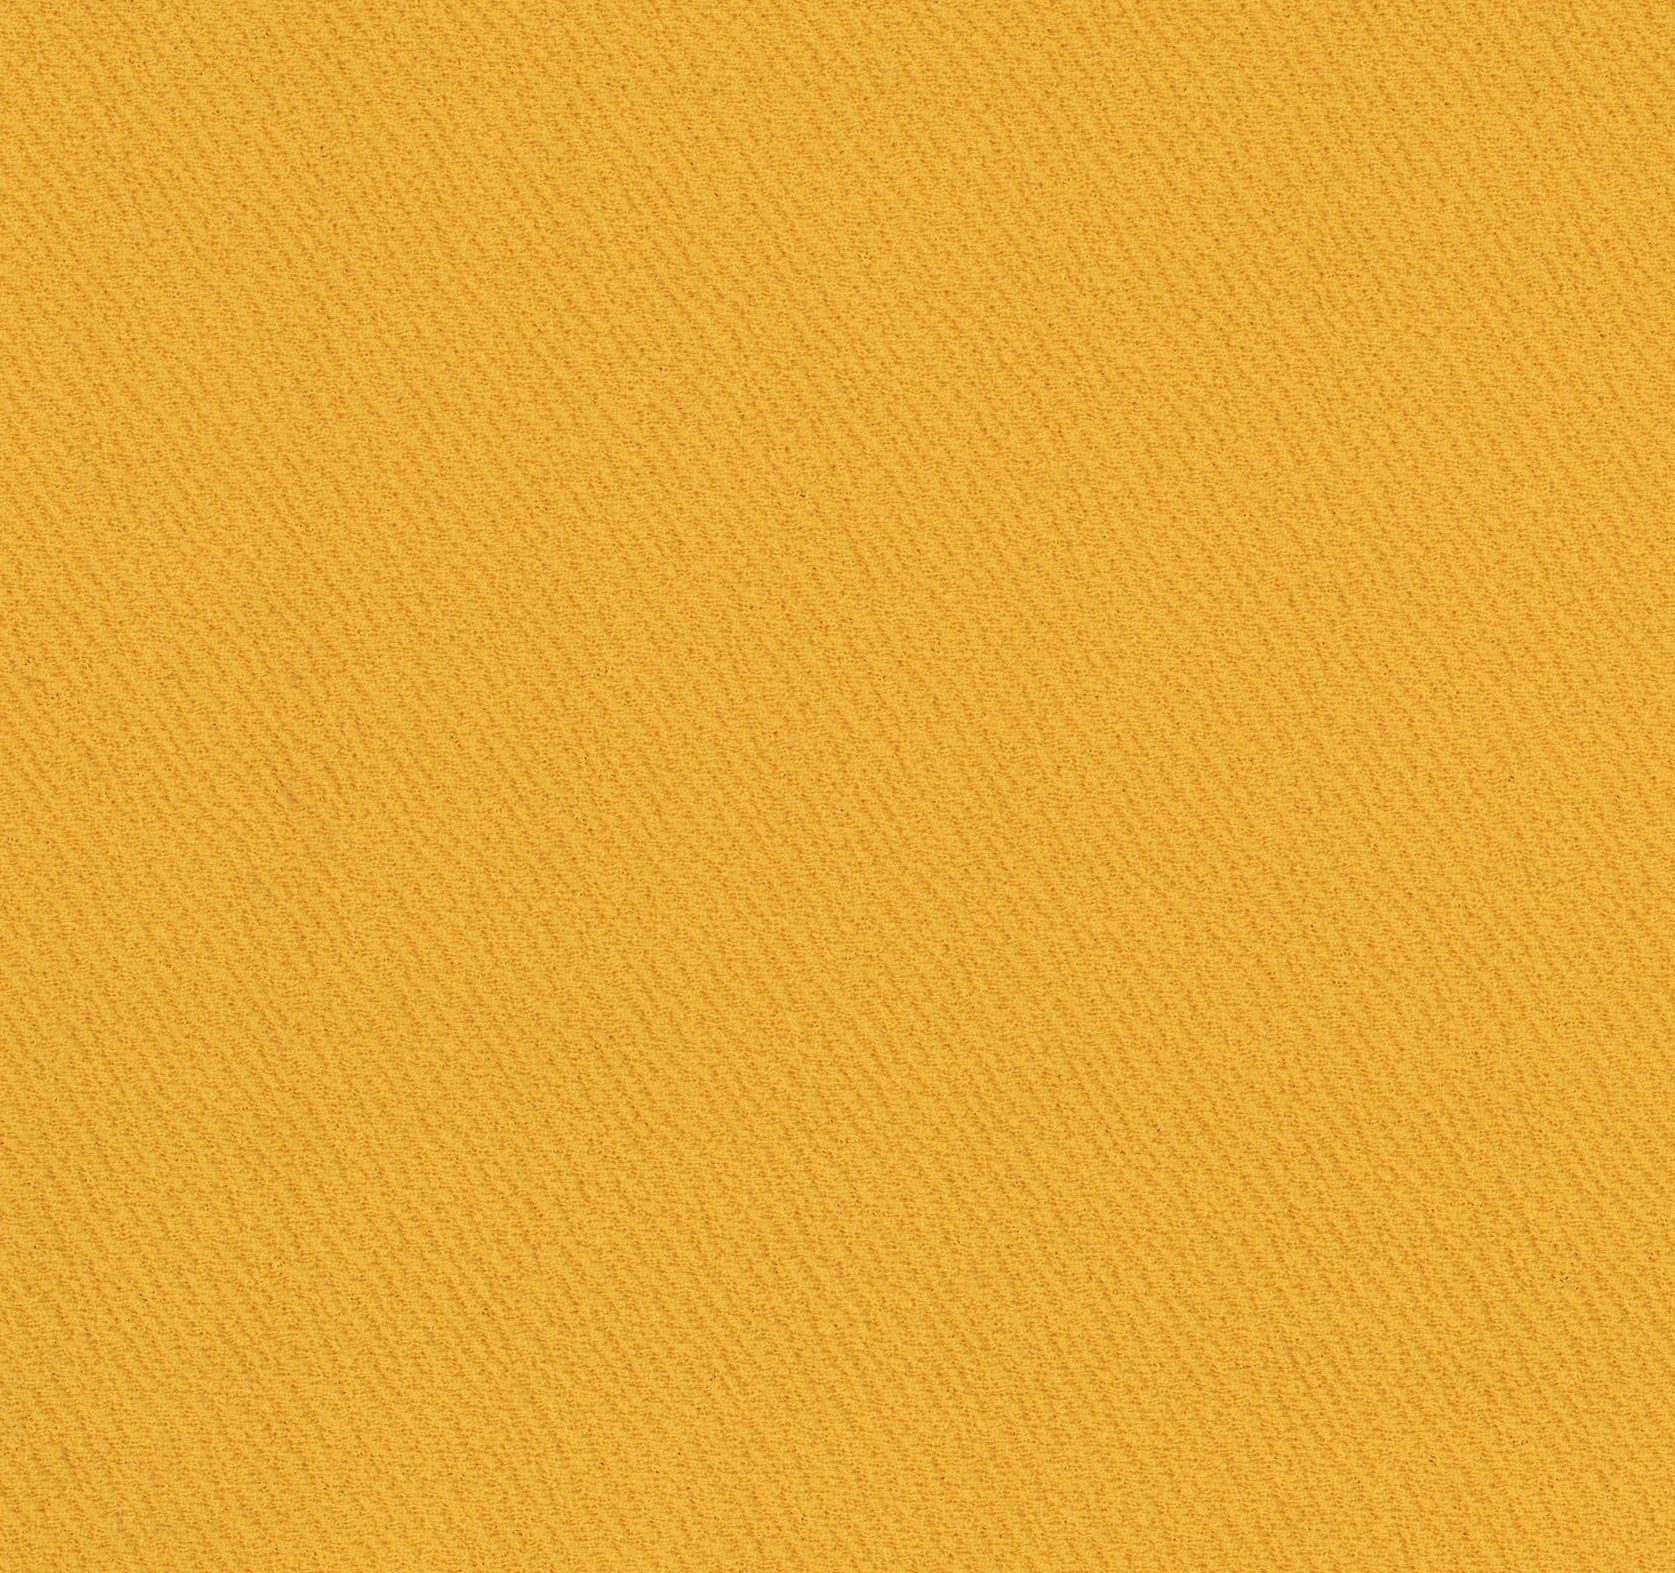 13018-04 Golden Rod Riverpool Jacquard Plain Dyed Blend 260g/yd 58&quot; blend jacquard knit plain dyed polyester spandex yellow Solid Color, Jacquard - knit fabric - woven fabric - fabric company - fabric wholesale - fabric b2b - fabric factory - high quality fabric - hong kong fabric - fabric hk - acetate fabric - cotton fabric - linen fabric - metallic fabric - nylon fabric - polyester fabric - spandex fabric - chun wing hing - cwh hk - fabric worldwide ship - 針織布 - 梳織布 - 布料公司- 布料批發 - 香港布料 - 秦榮興